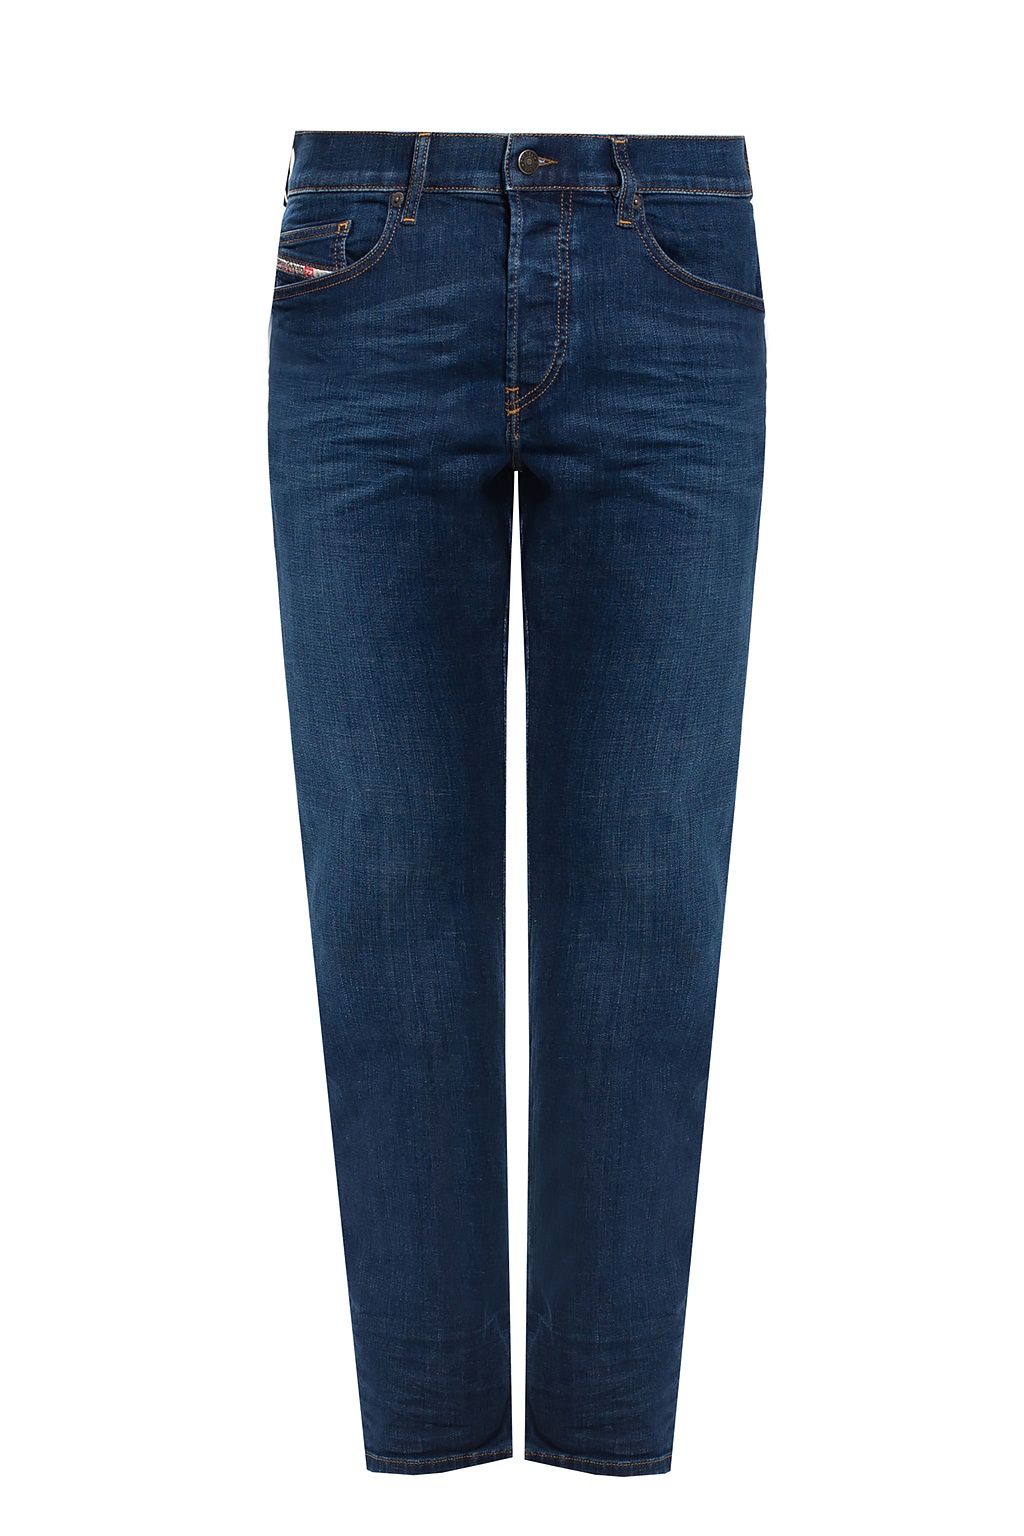 jeans | - pepe | \'D IetpShops jeans Шапка - Diesel Men\'s Mihtry\' Clothing